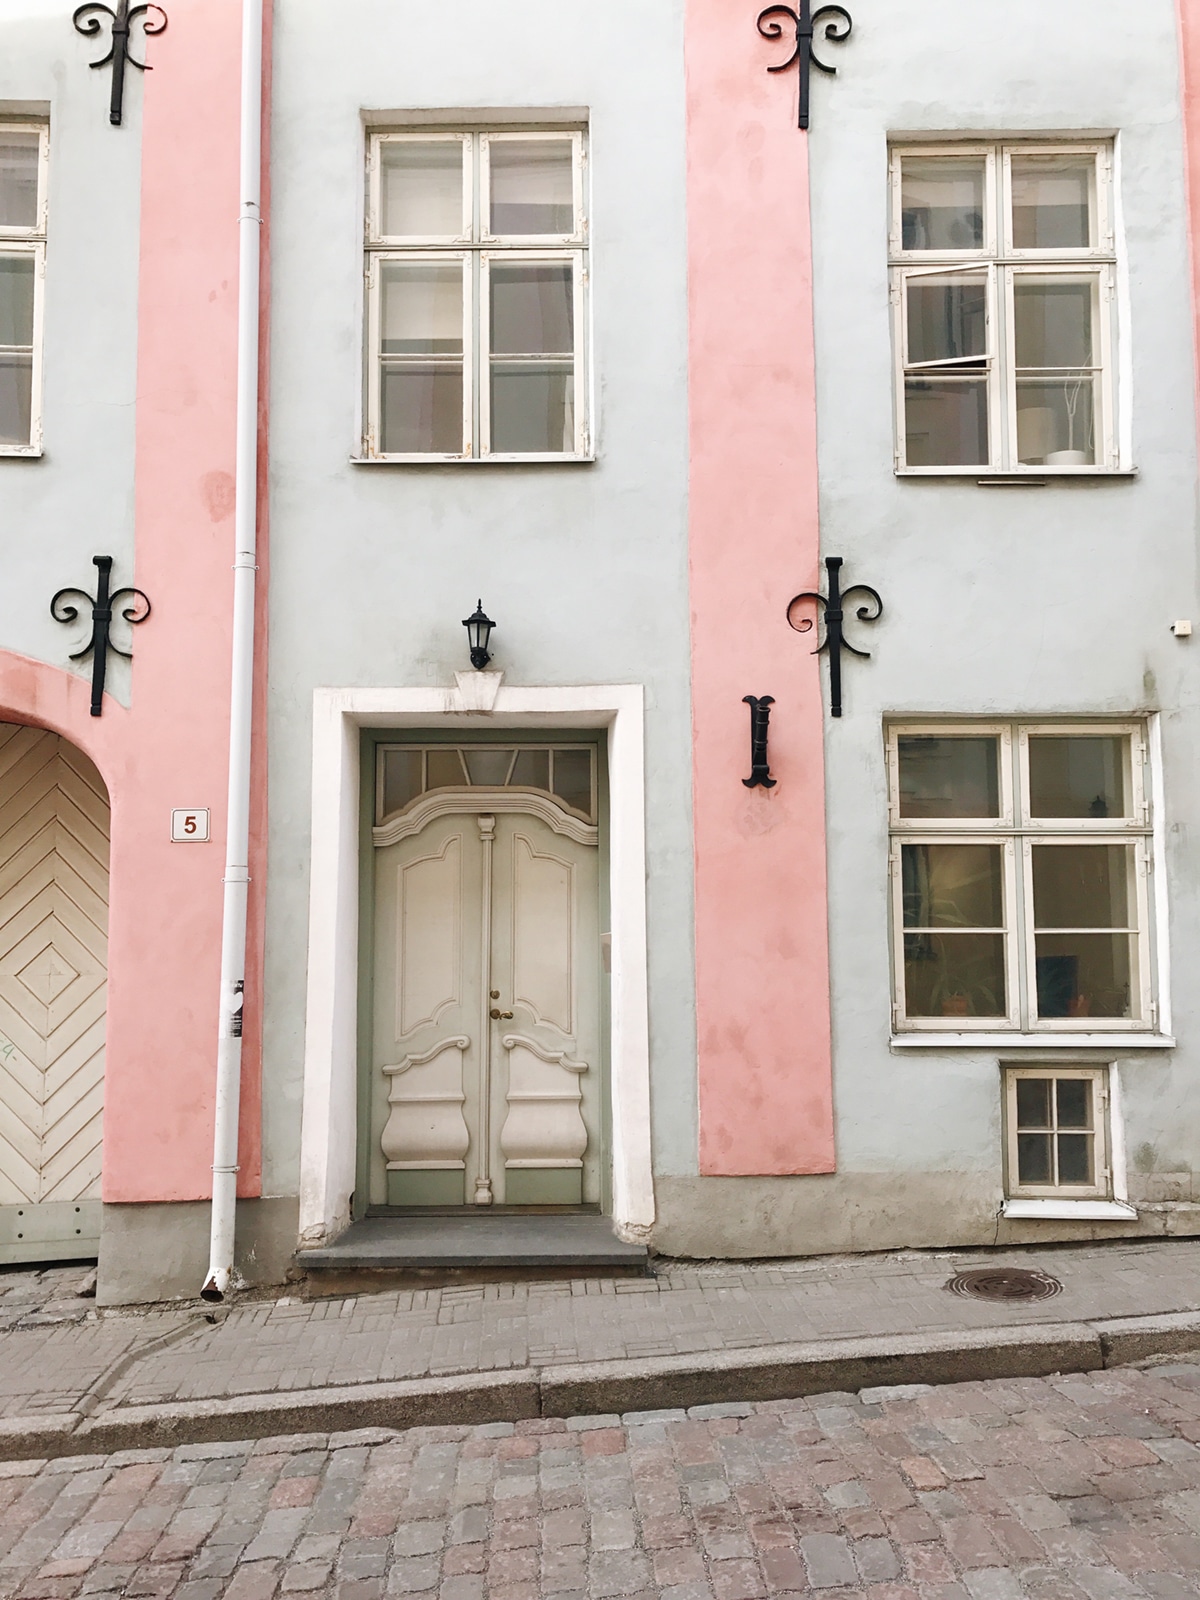 see the pastel walls and beautiful doors of Tallinn, Estonia | visual travel diary on coco kelley